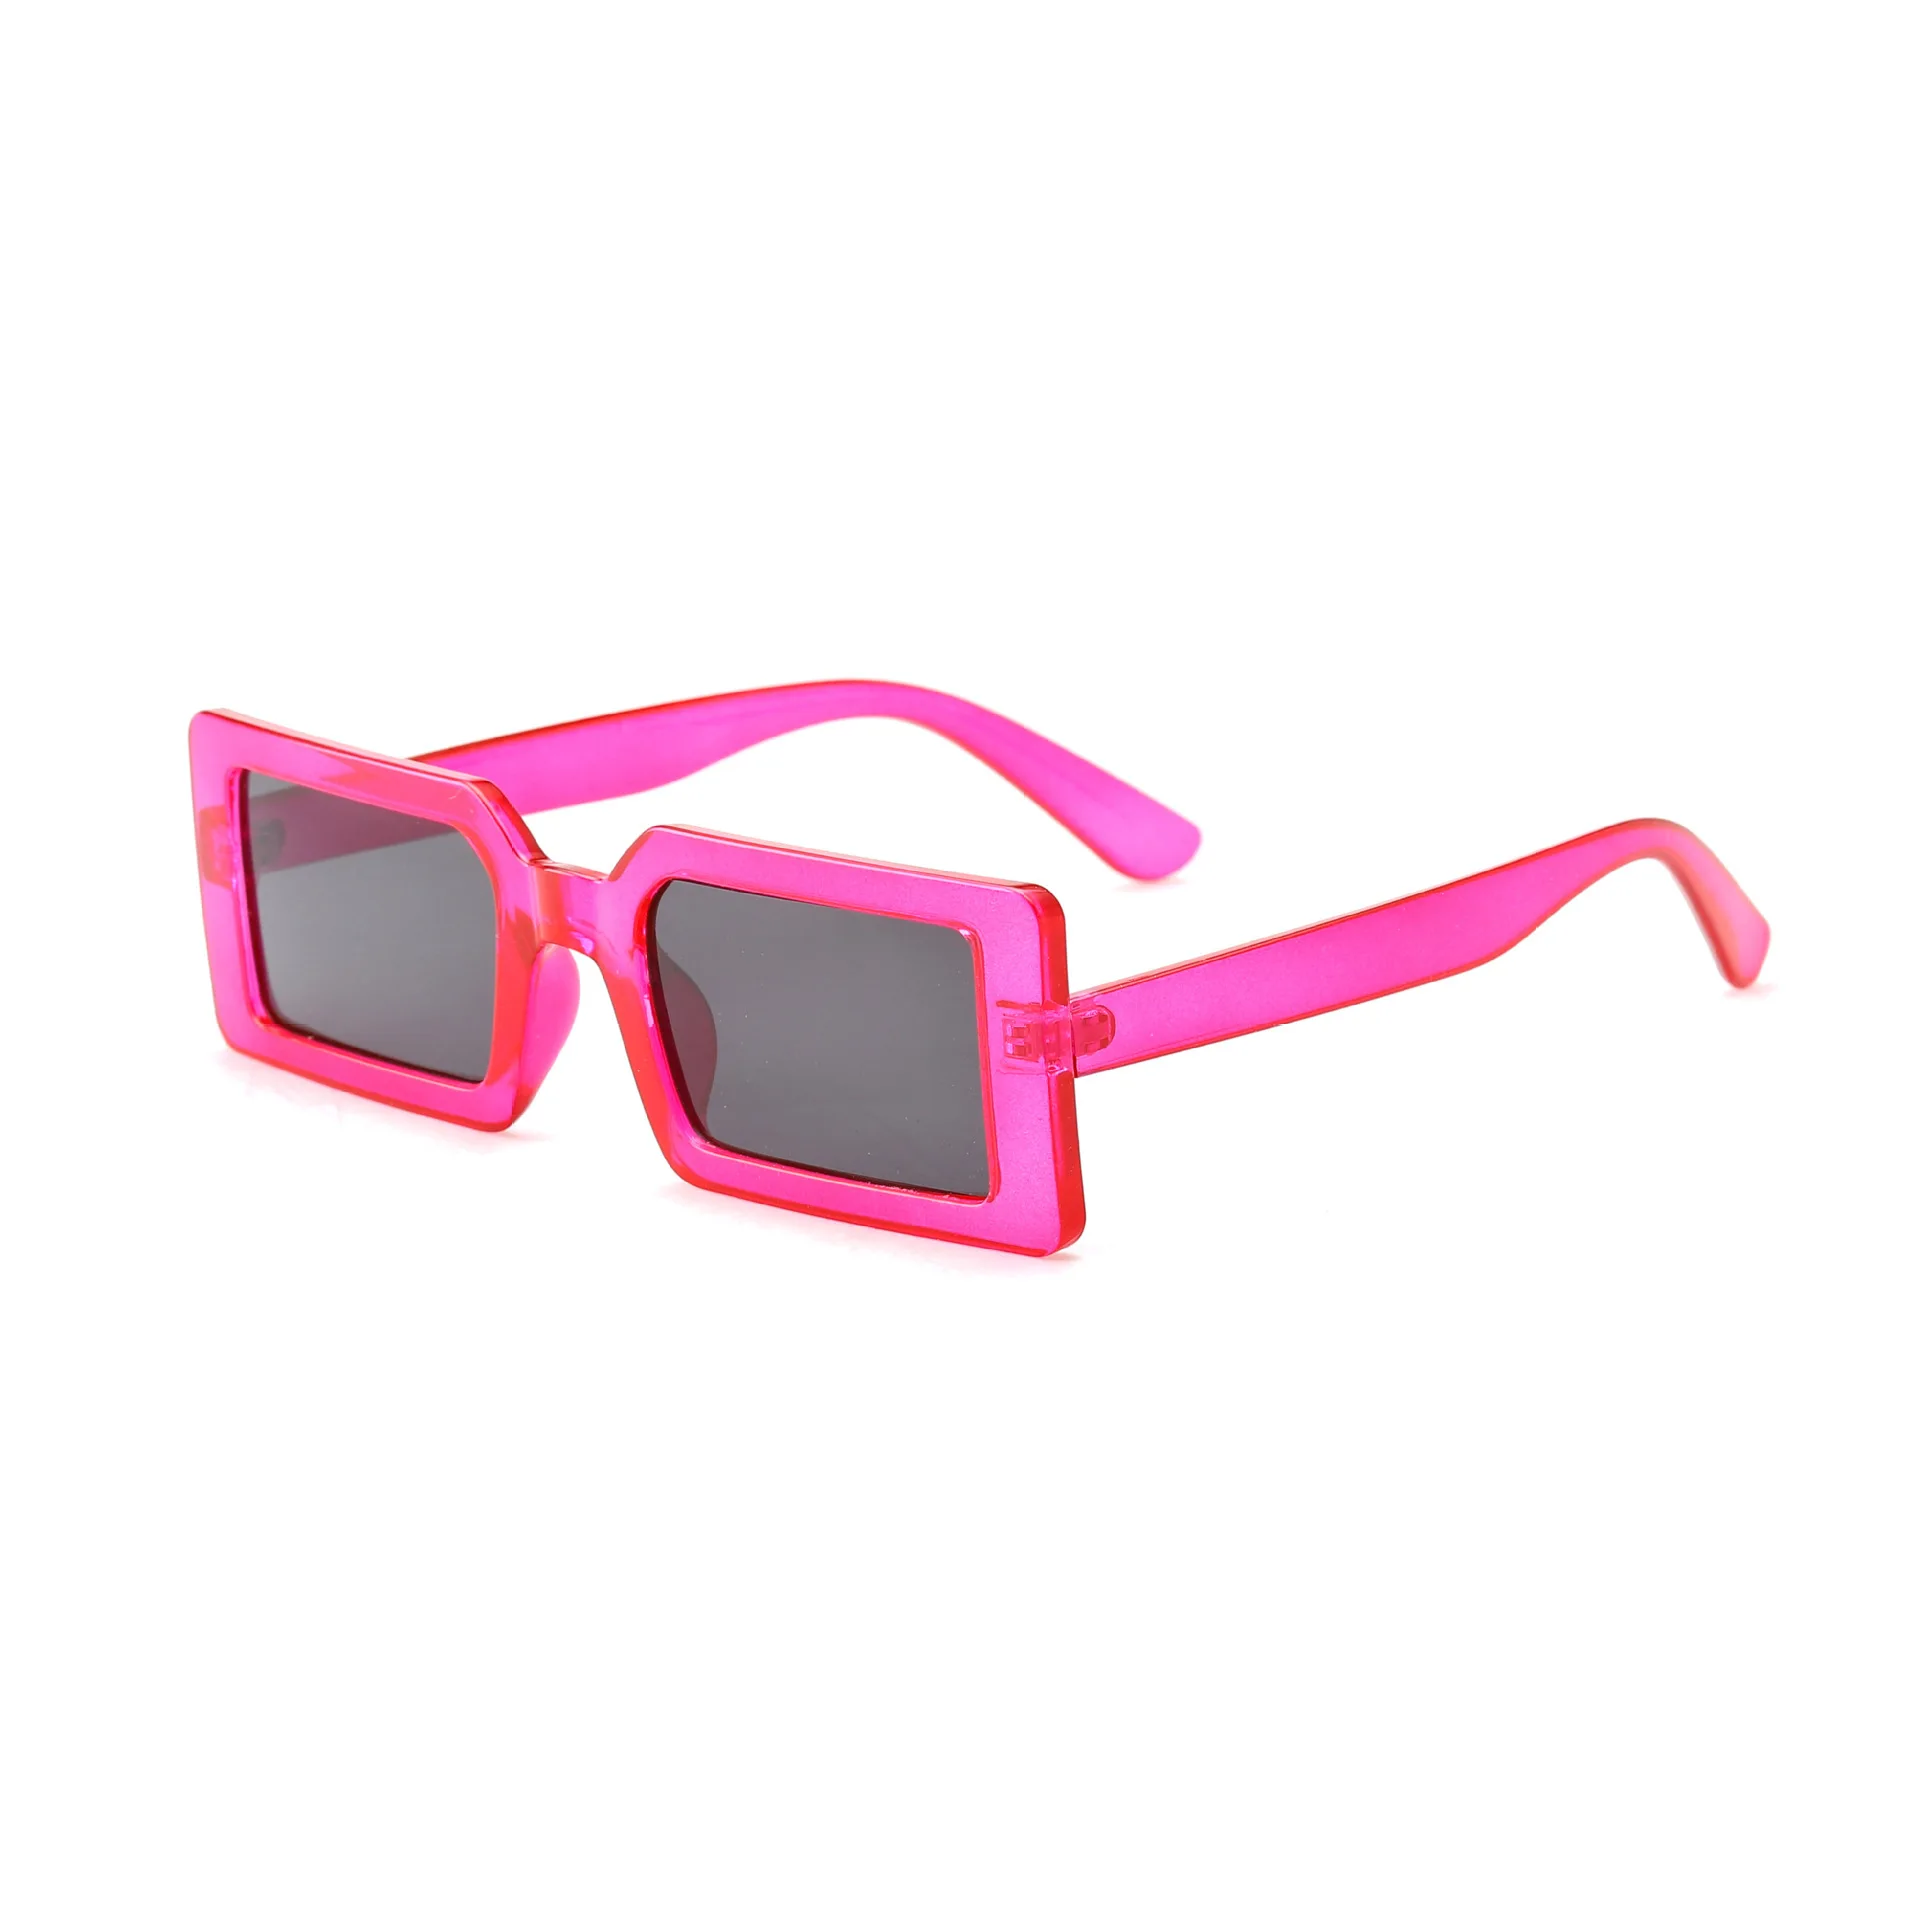 New Fluorescent Green Sunglasses Trendy Personality Retro Small Square Sunglasses Fashion Catwalk Street Shooting Glasses